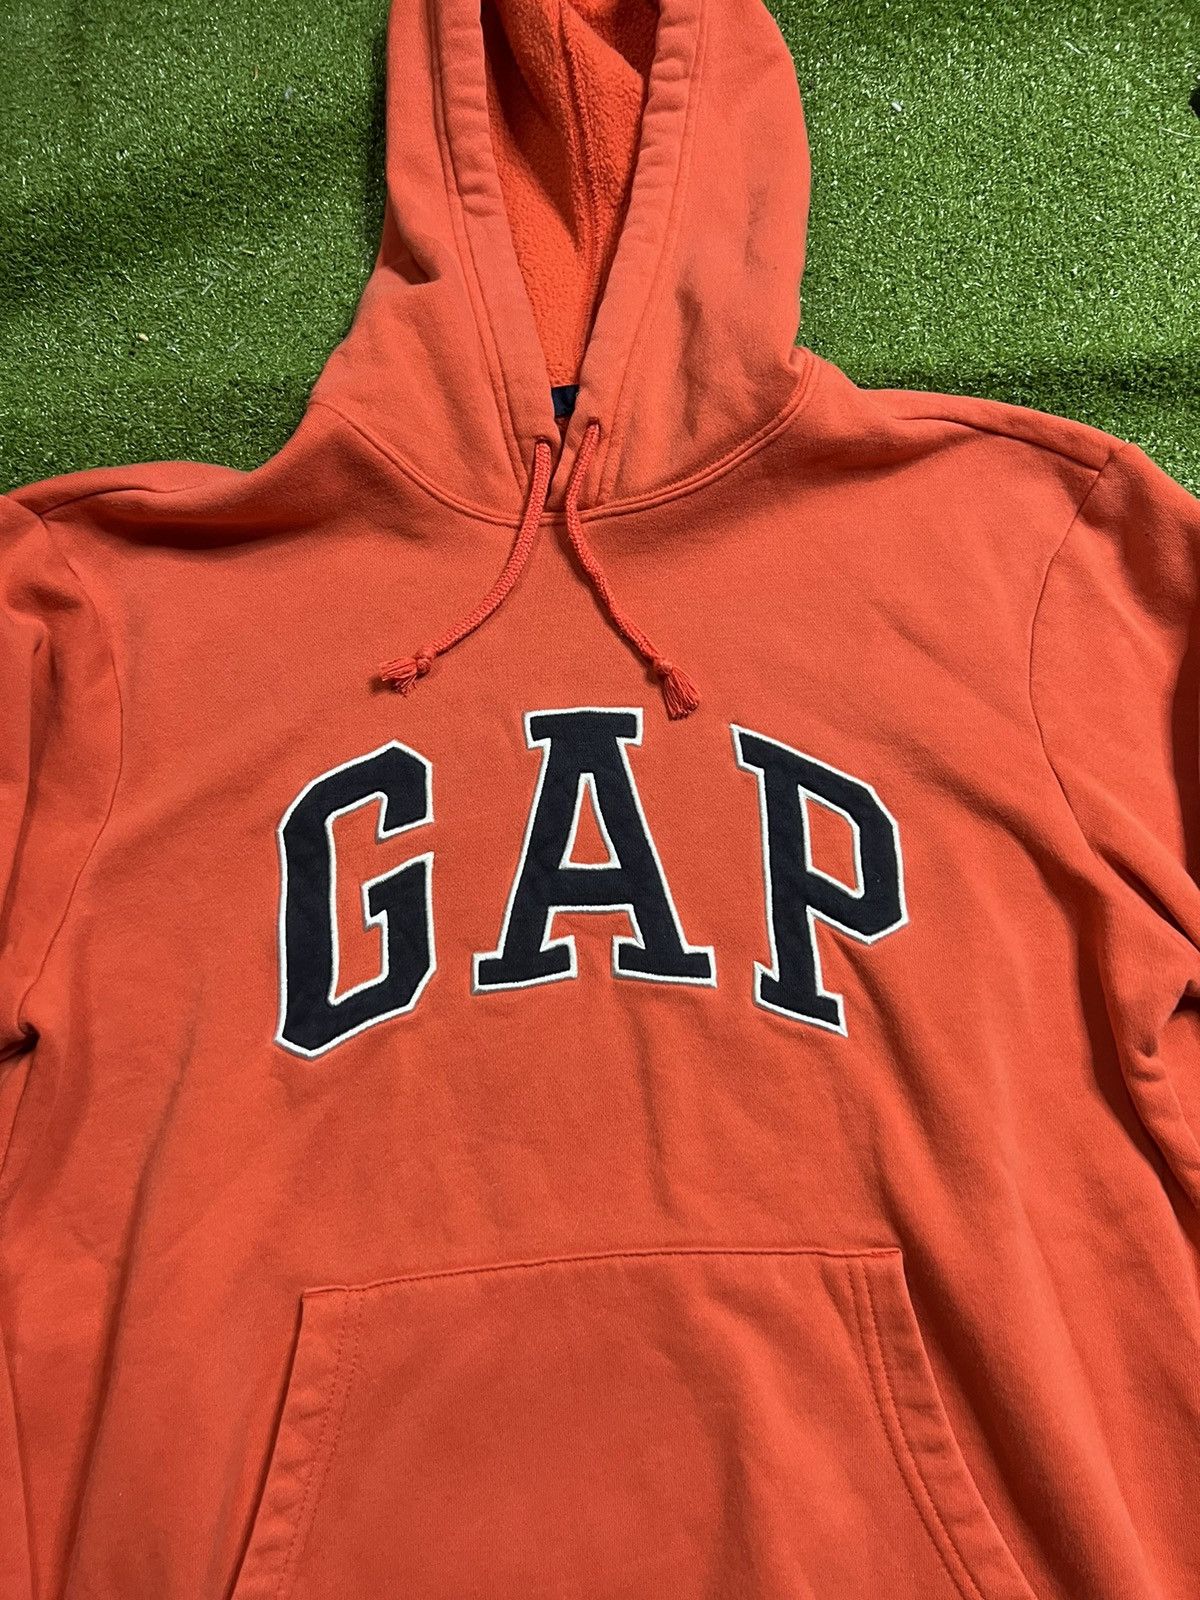 Vintage vintage orange and black gap spell out hoodie Size US M / EU 48-50 / 2 - 2 Preview